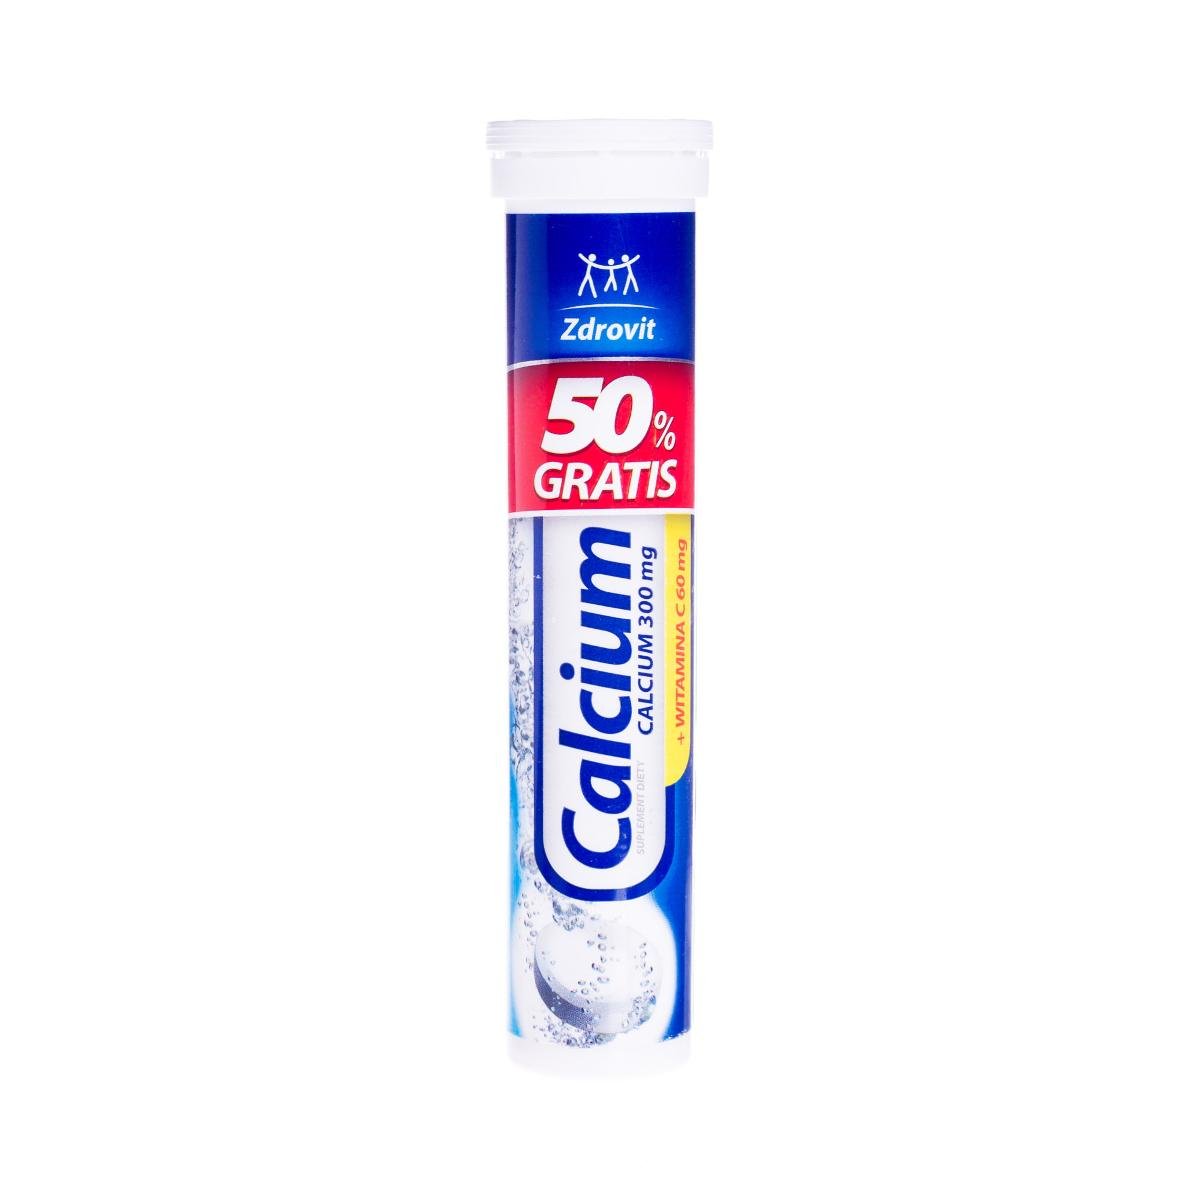 ZDROVIT CALCIUM 300 Mg + VITAMIN C (mandarynka) - 20 tabletek  - >>> WYSYŁKA w 24h 